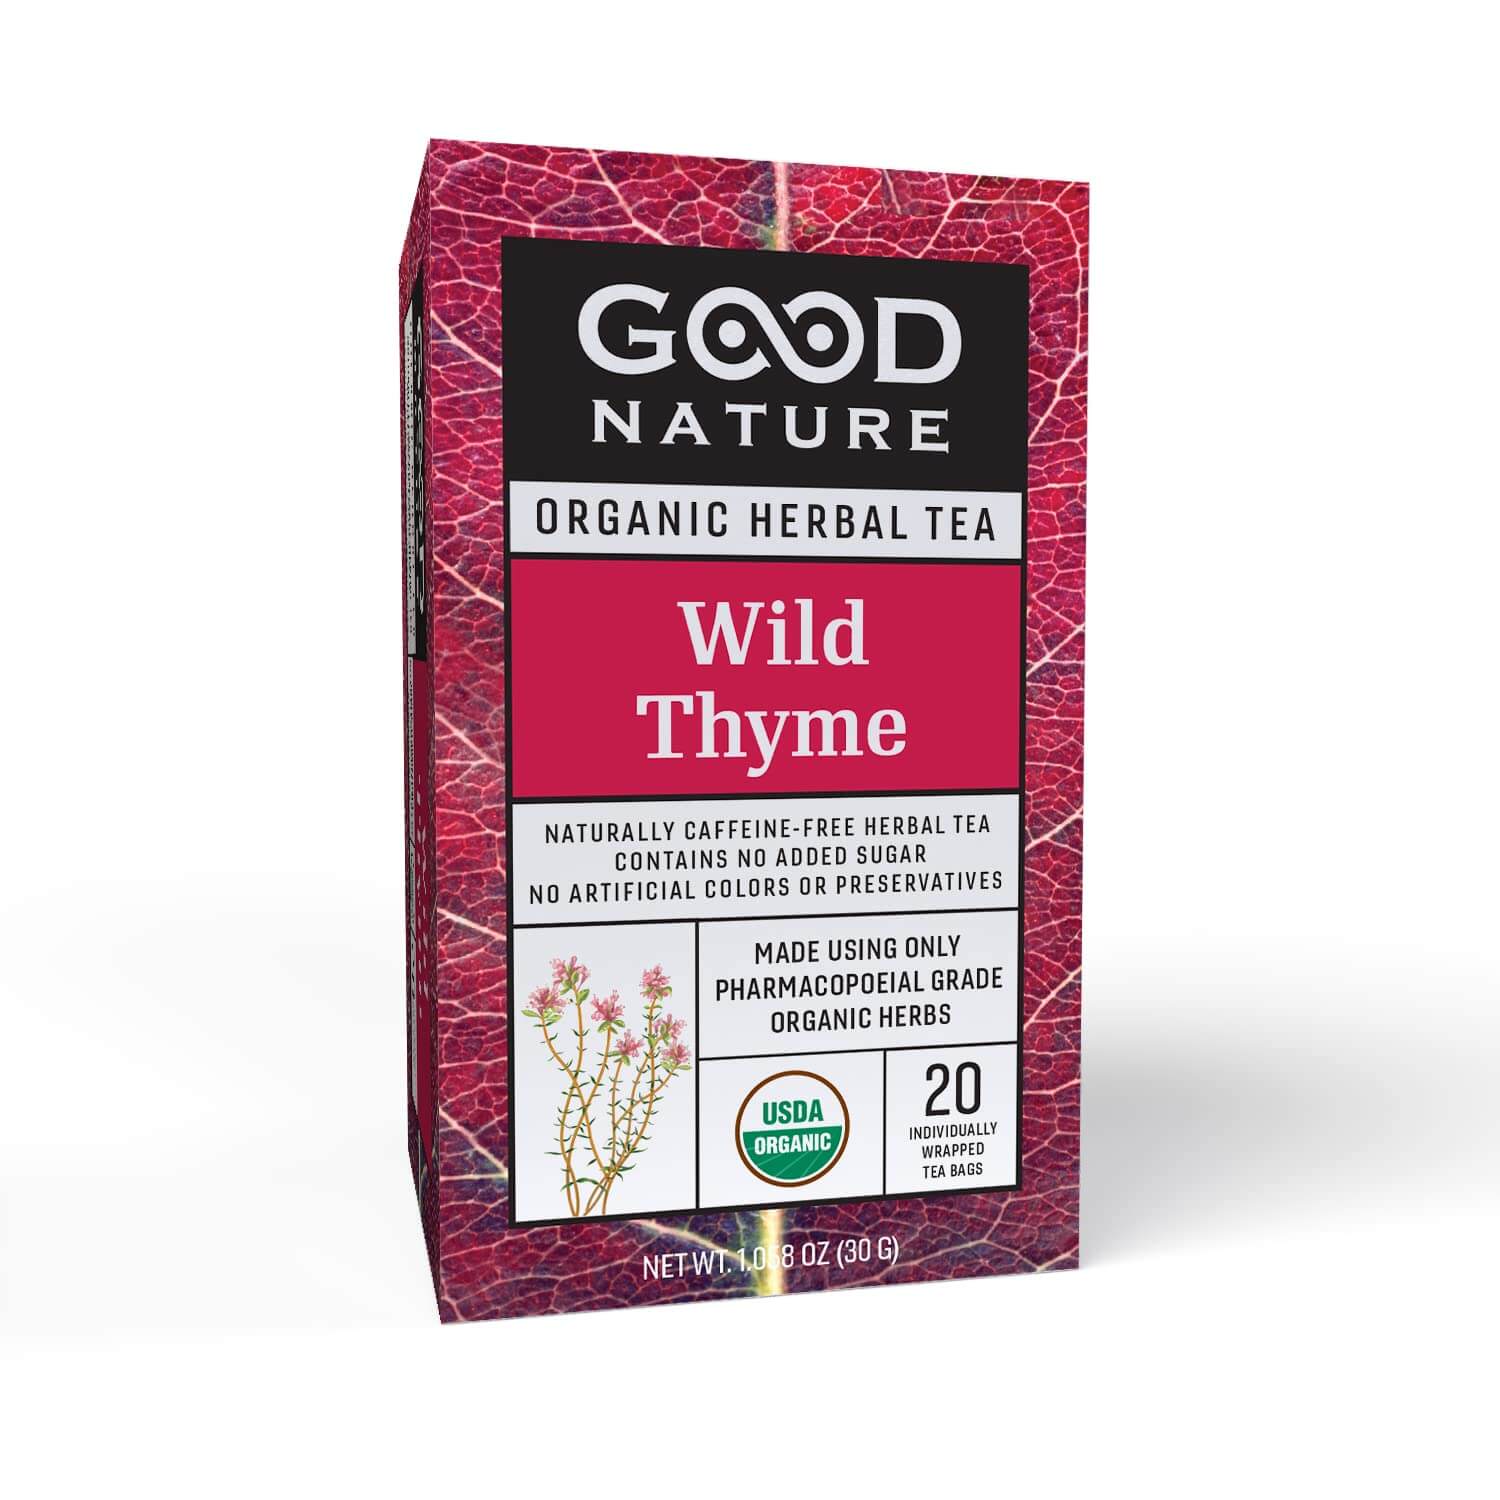 Good Nature Organic Wild Thyme Tea